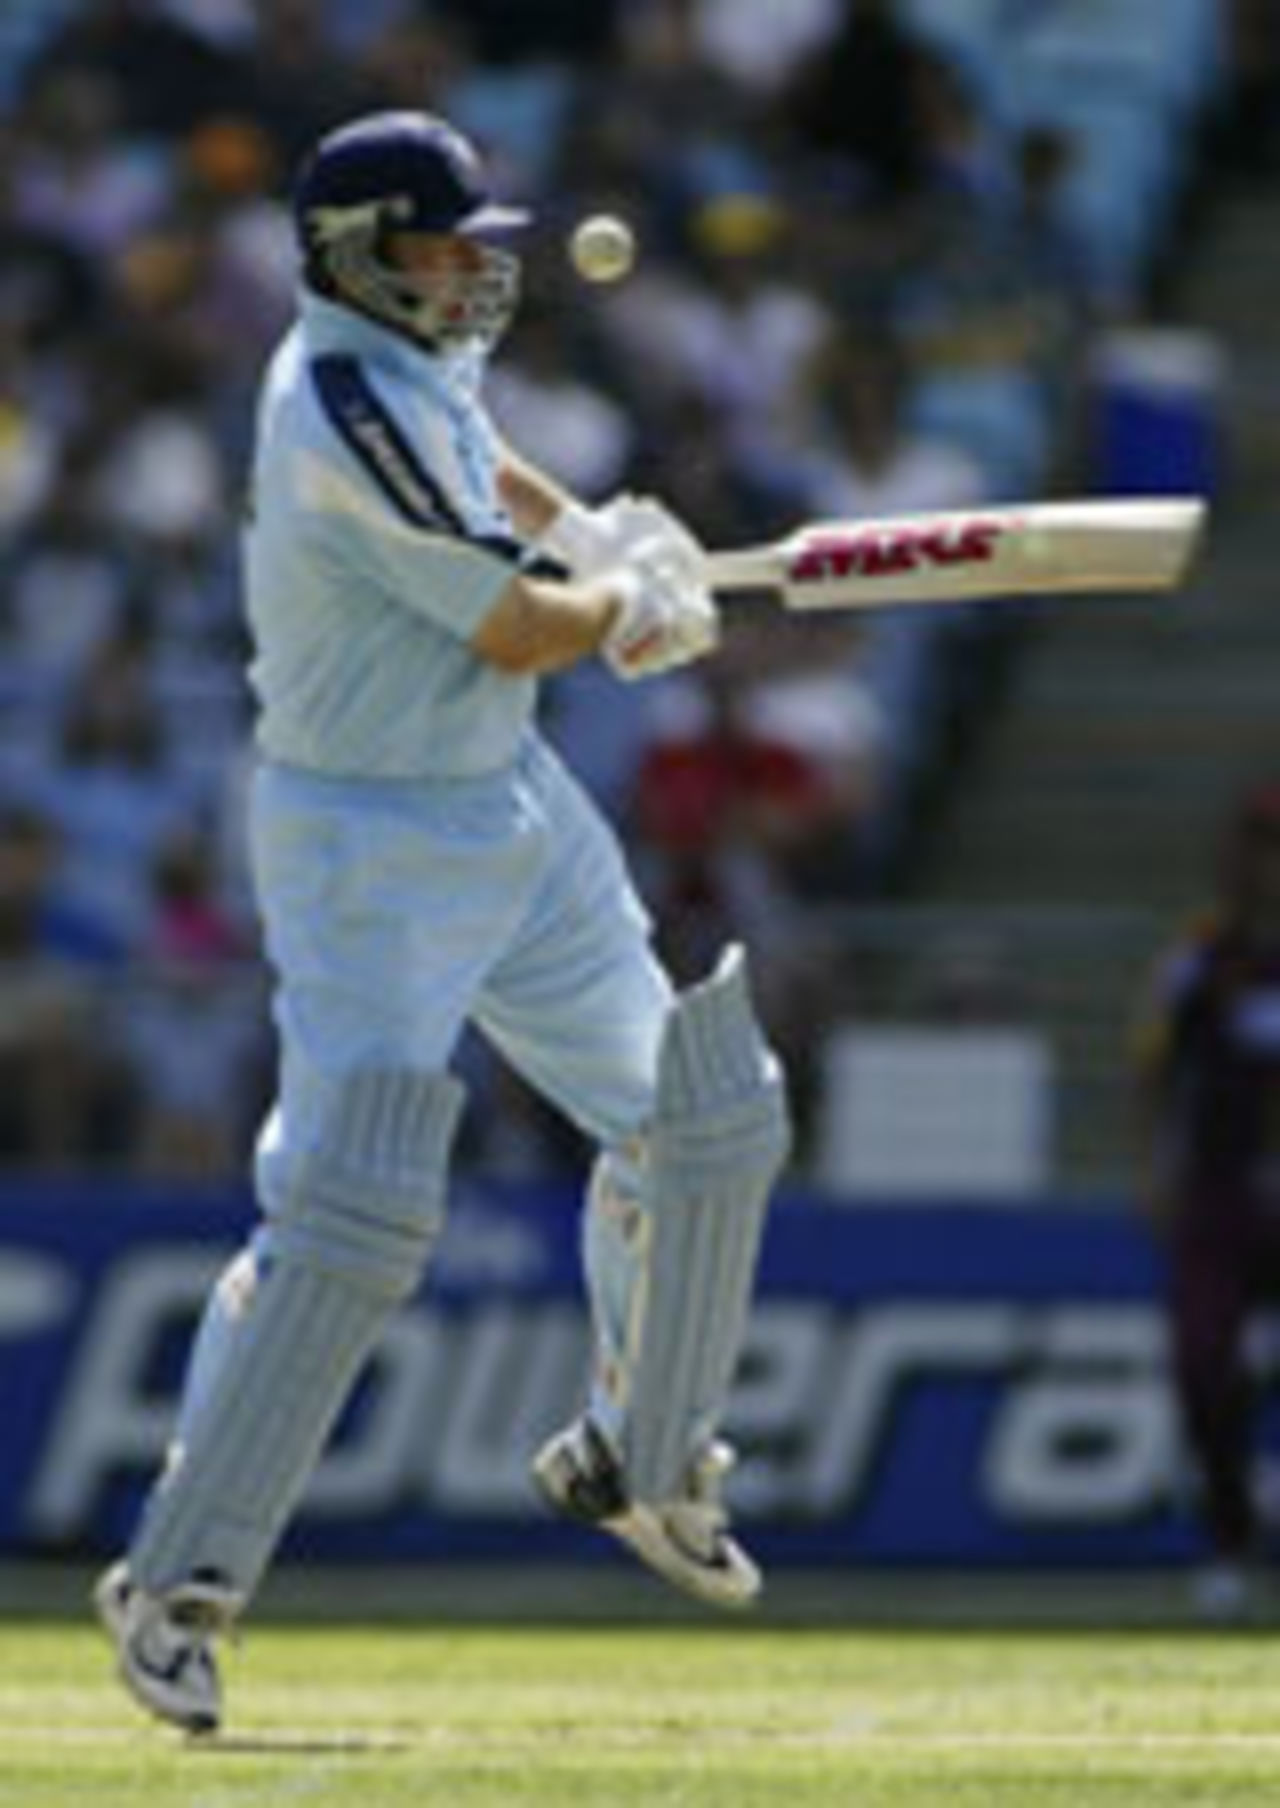 Steve Waugh batting, NSW v Queensland, ING Cup, Telstra Stadium, January 17, 2004